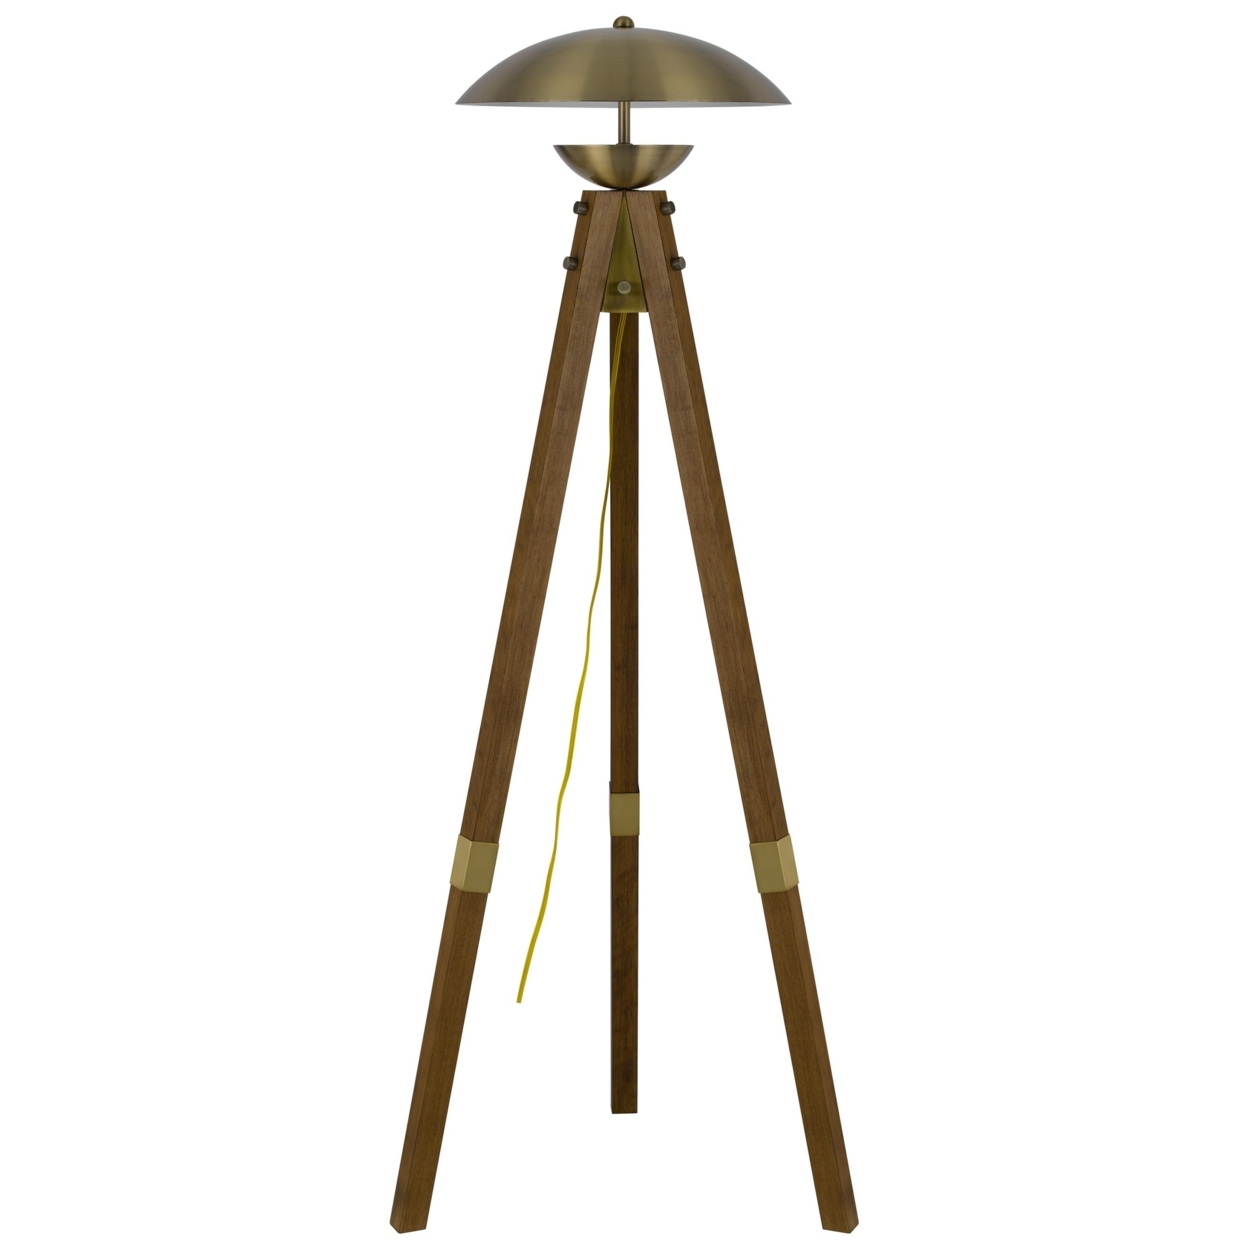 55 Inch Wood Tripod Floor Lamp, Half Domed Metal Shade, Antique Brass- Saltoro Sherpi